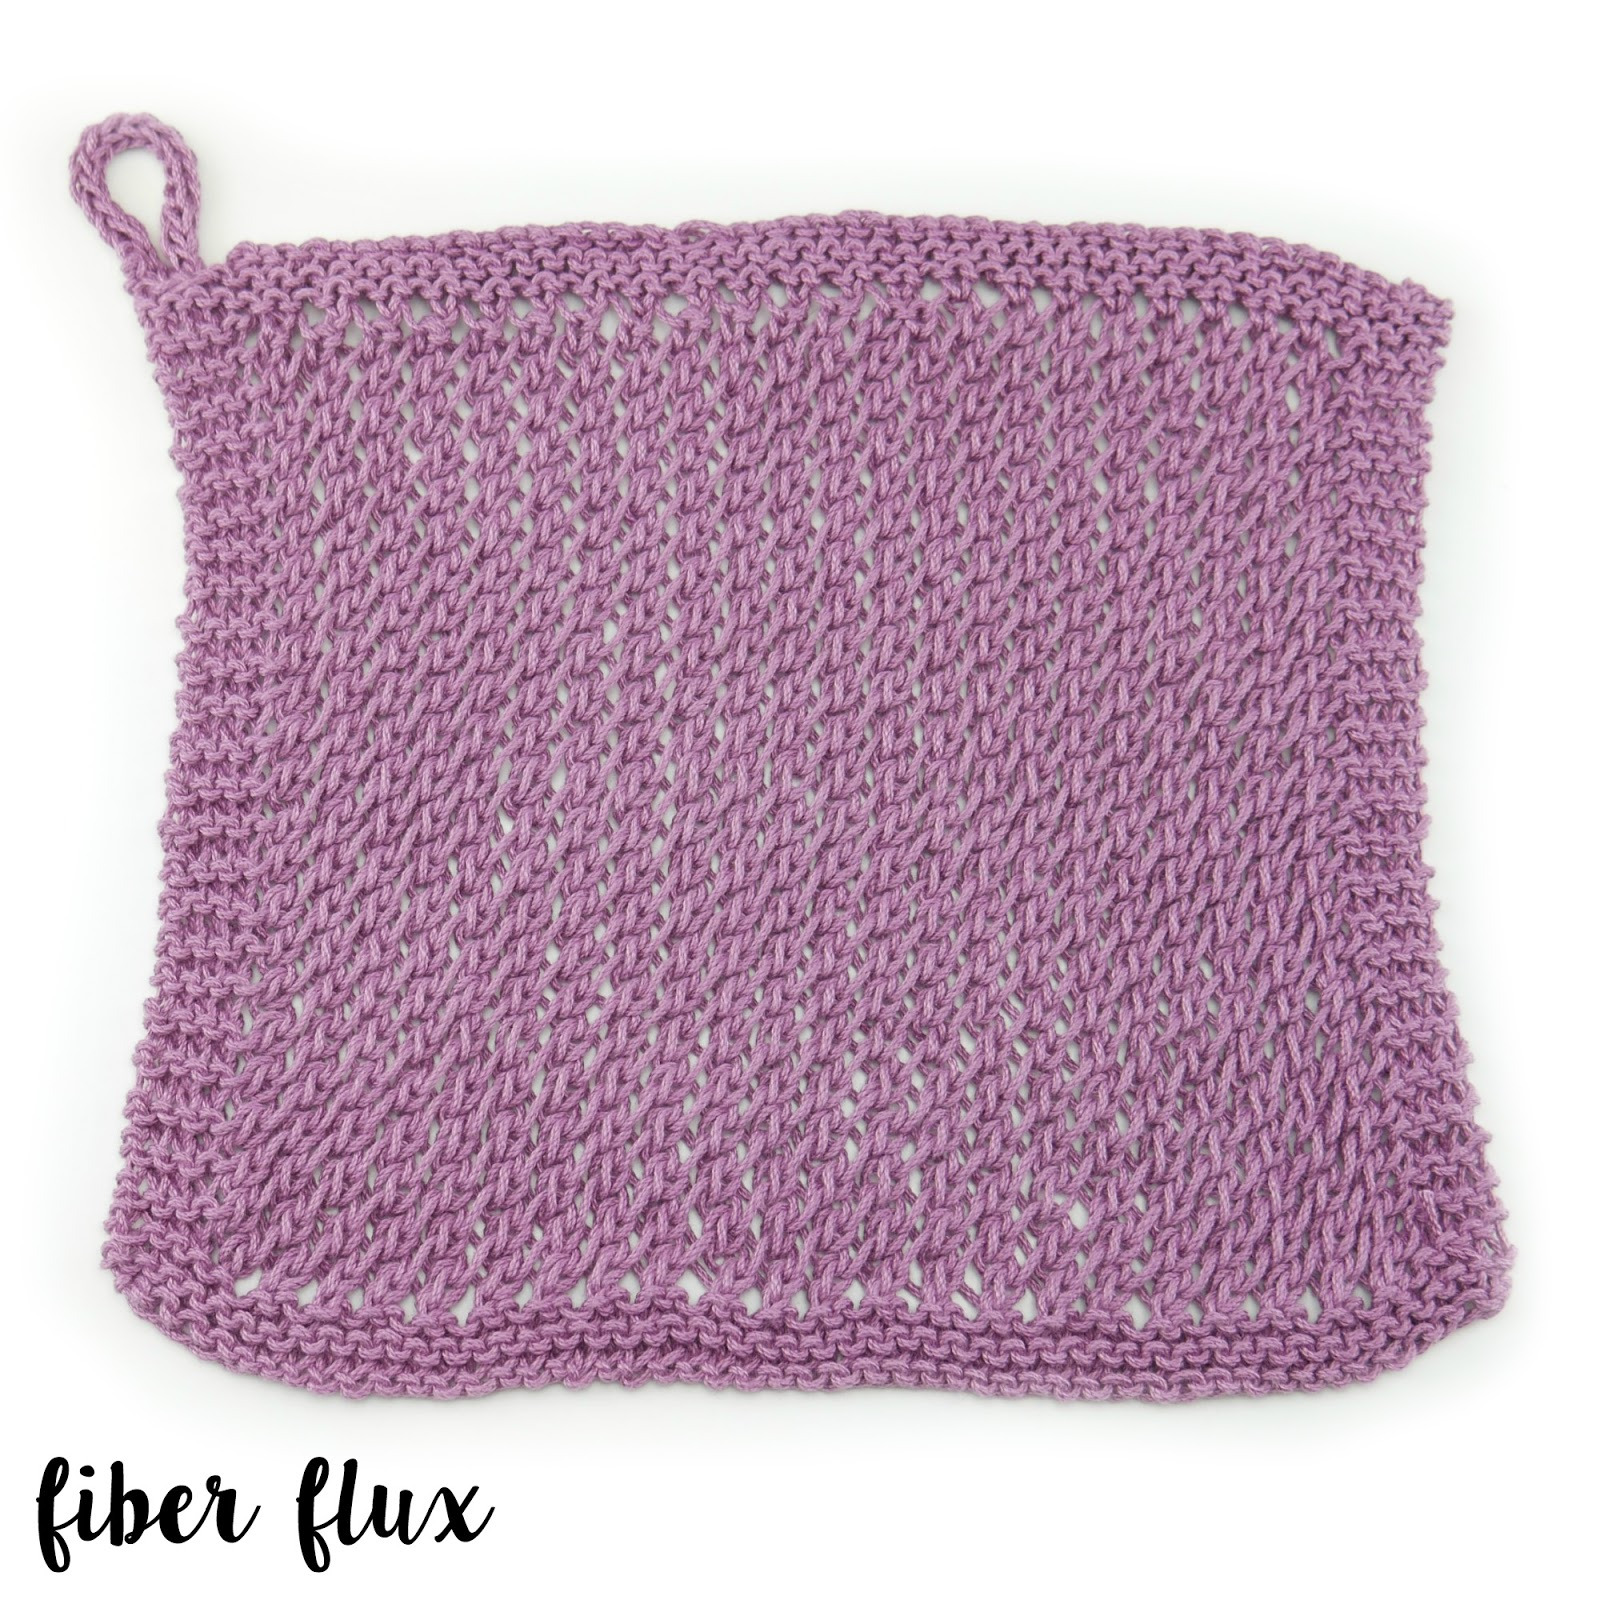 Free Easy Knitting Patterns Fiber Flux Free Knitting Patterntextured Lace Dishcloth